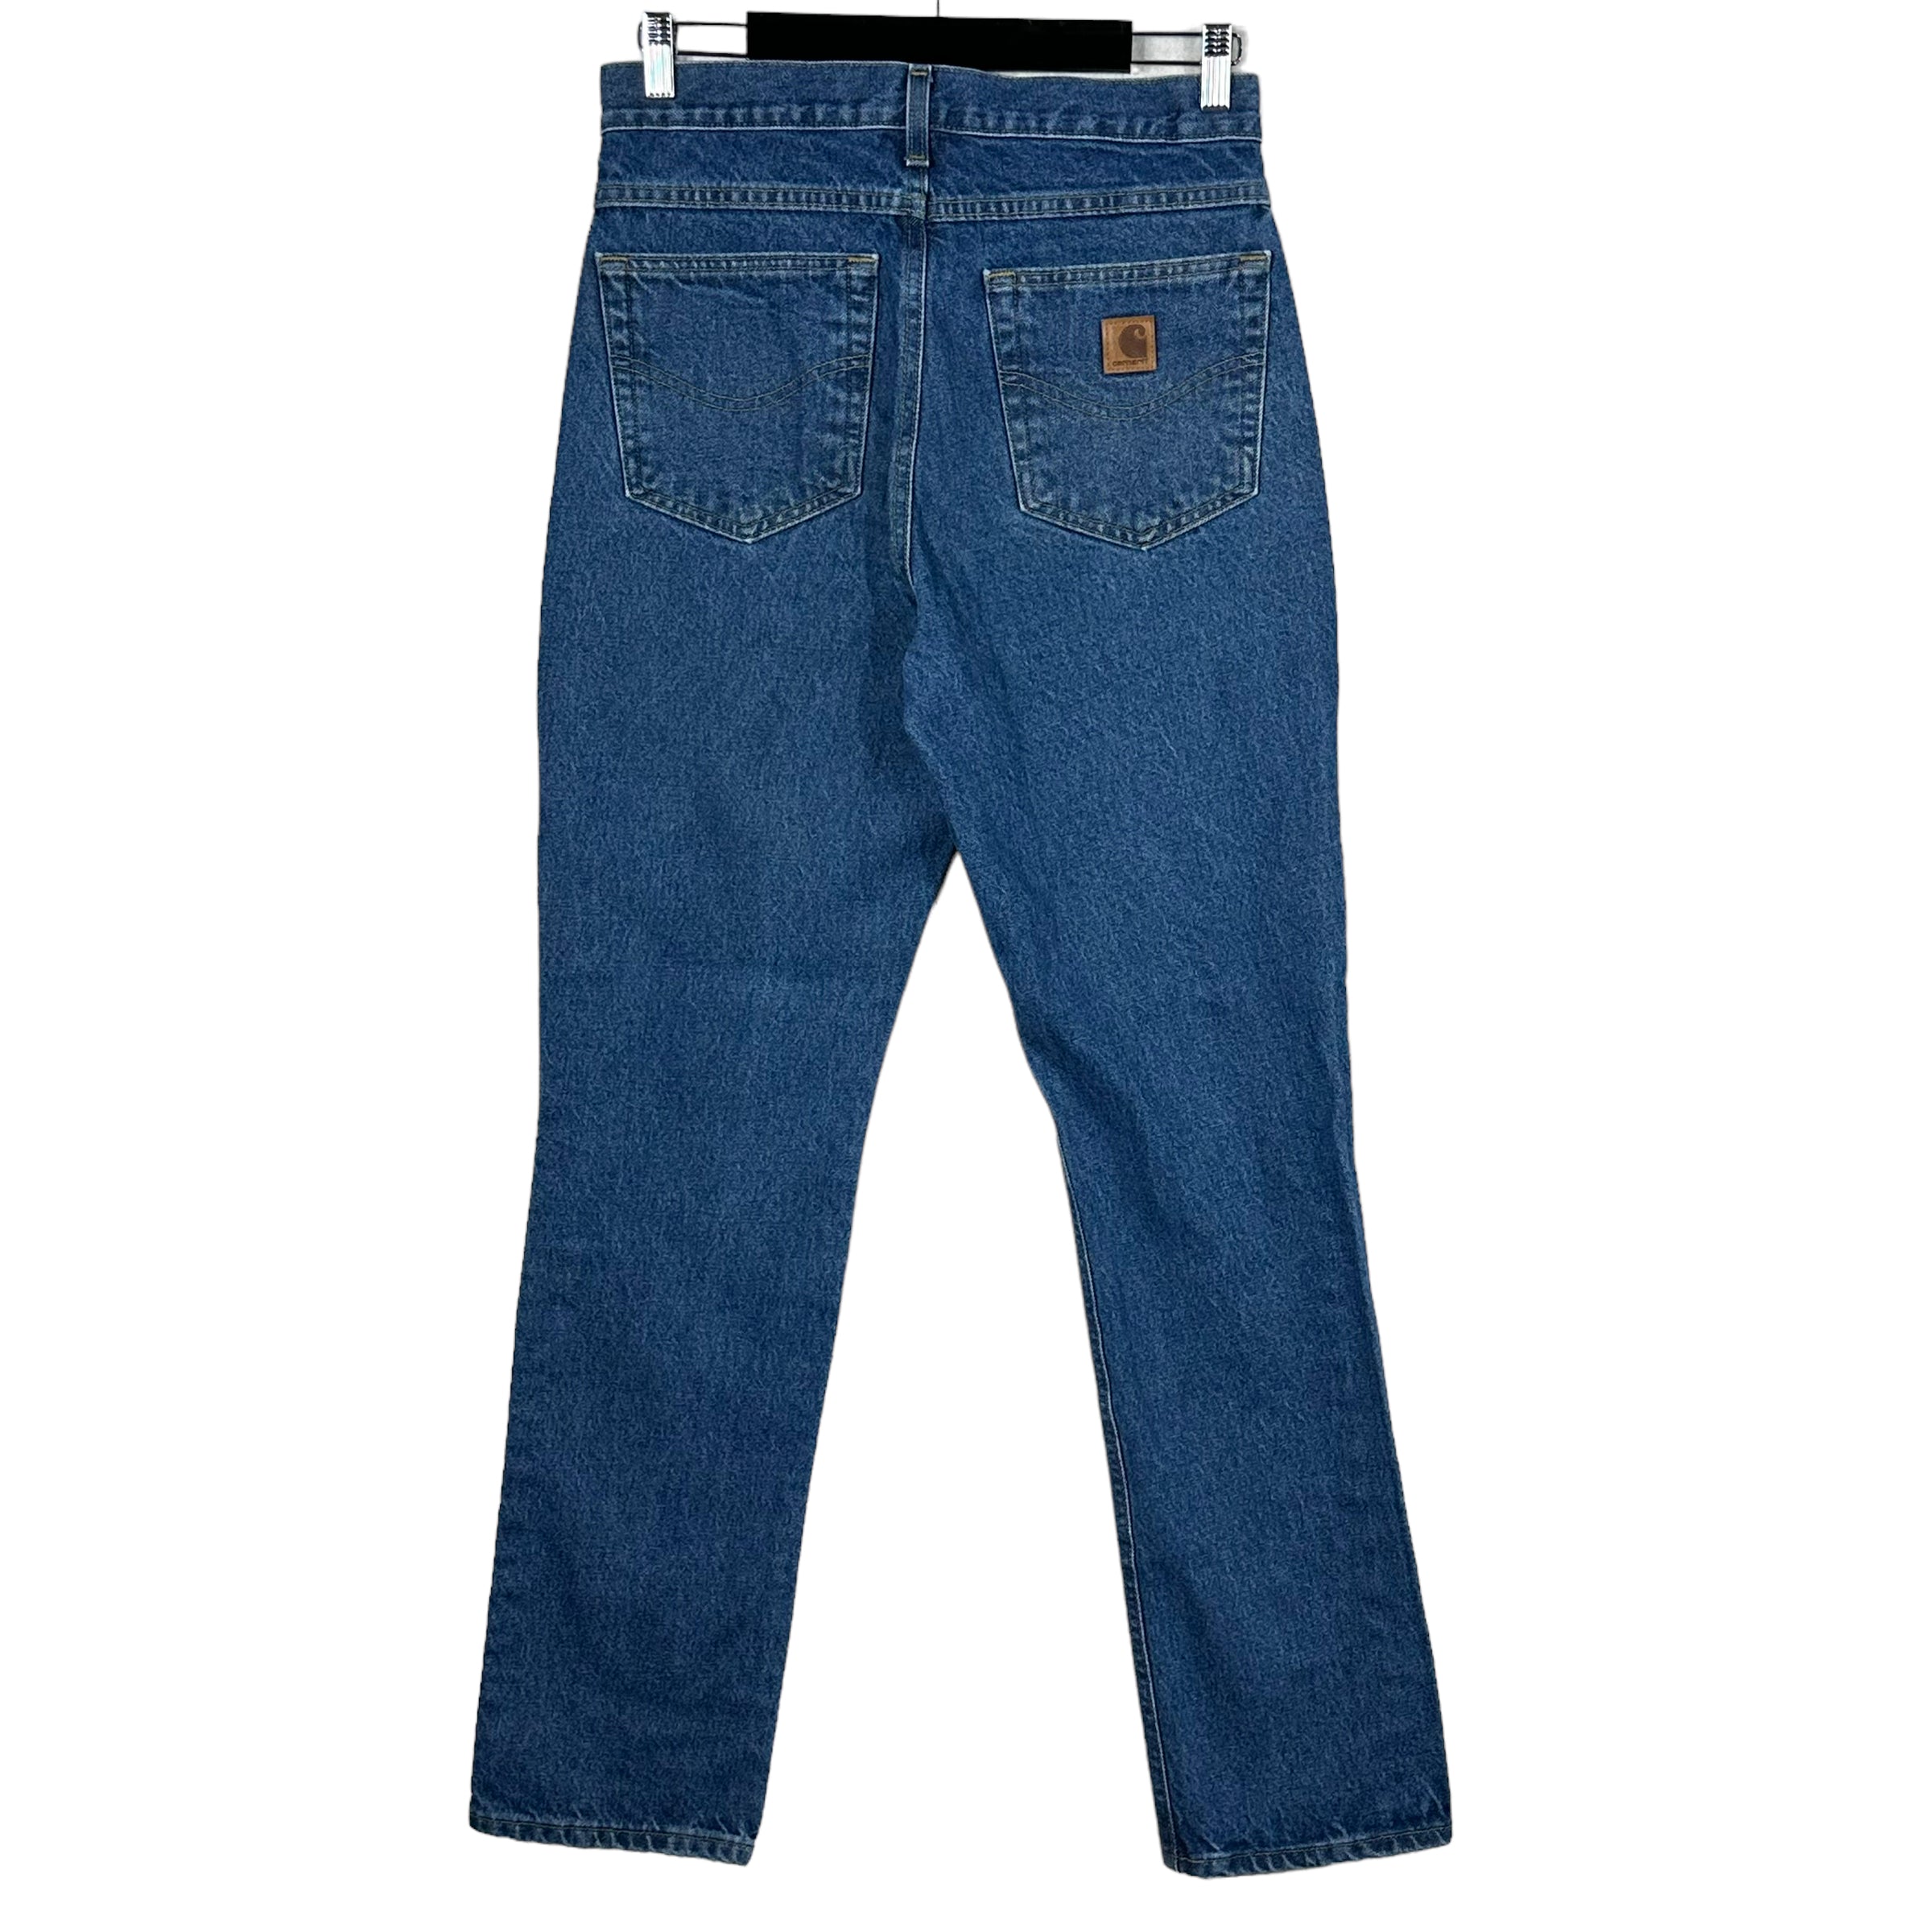 Vintage Carhartt Denim Jeans